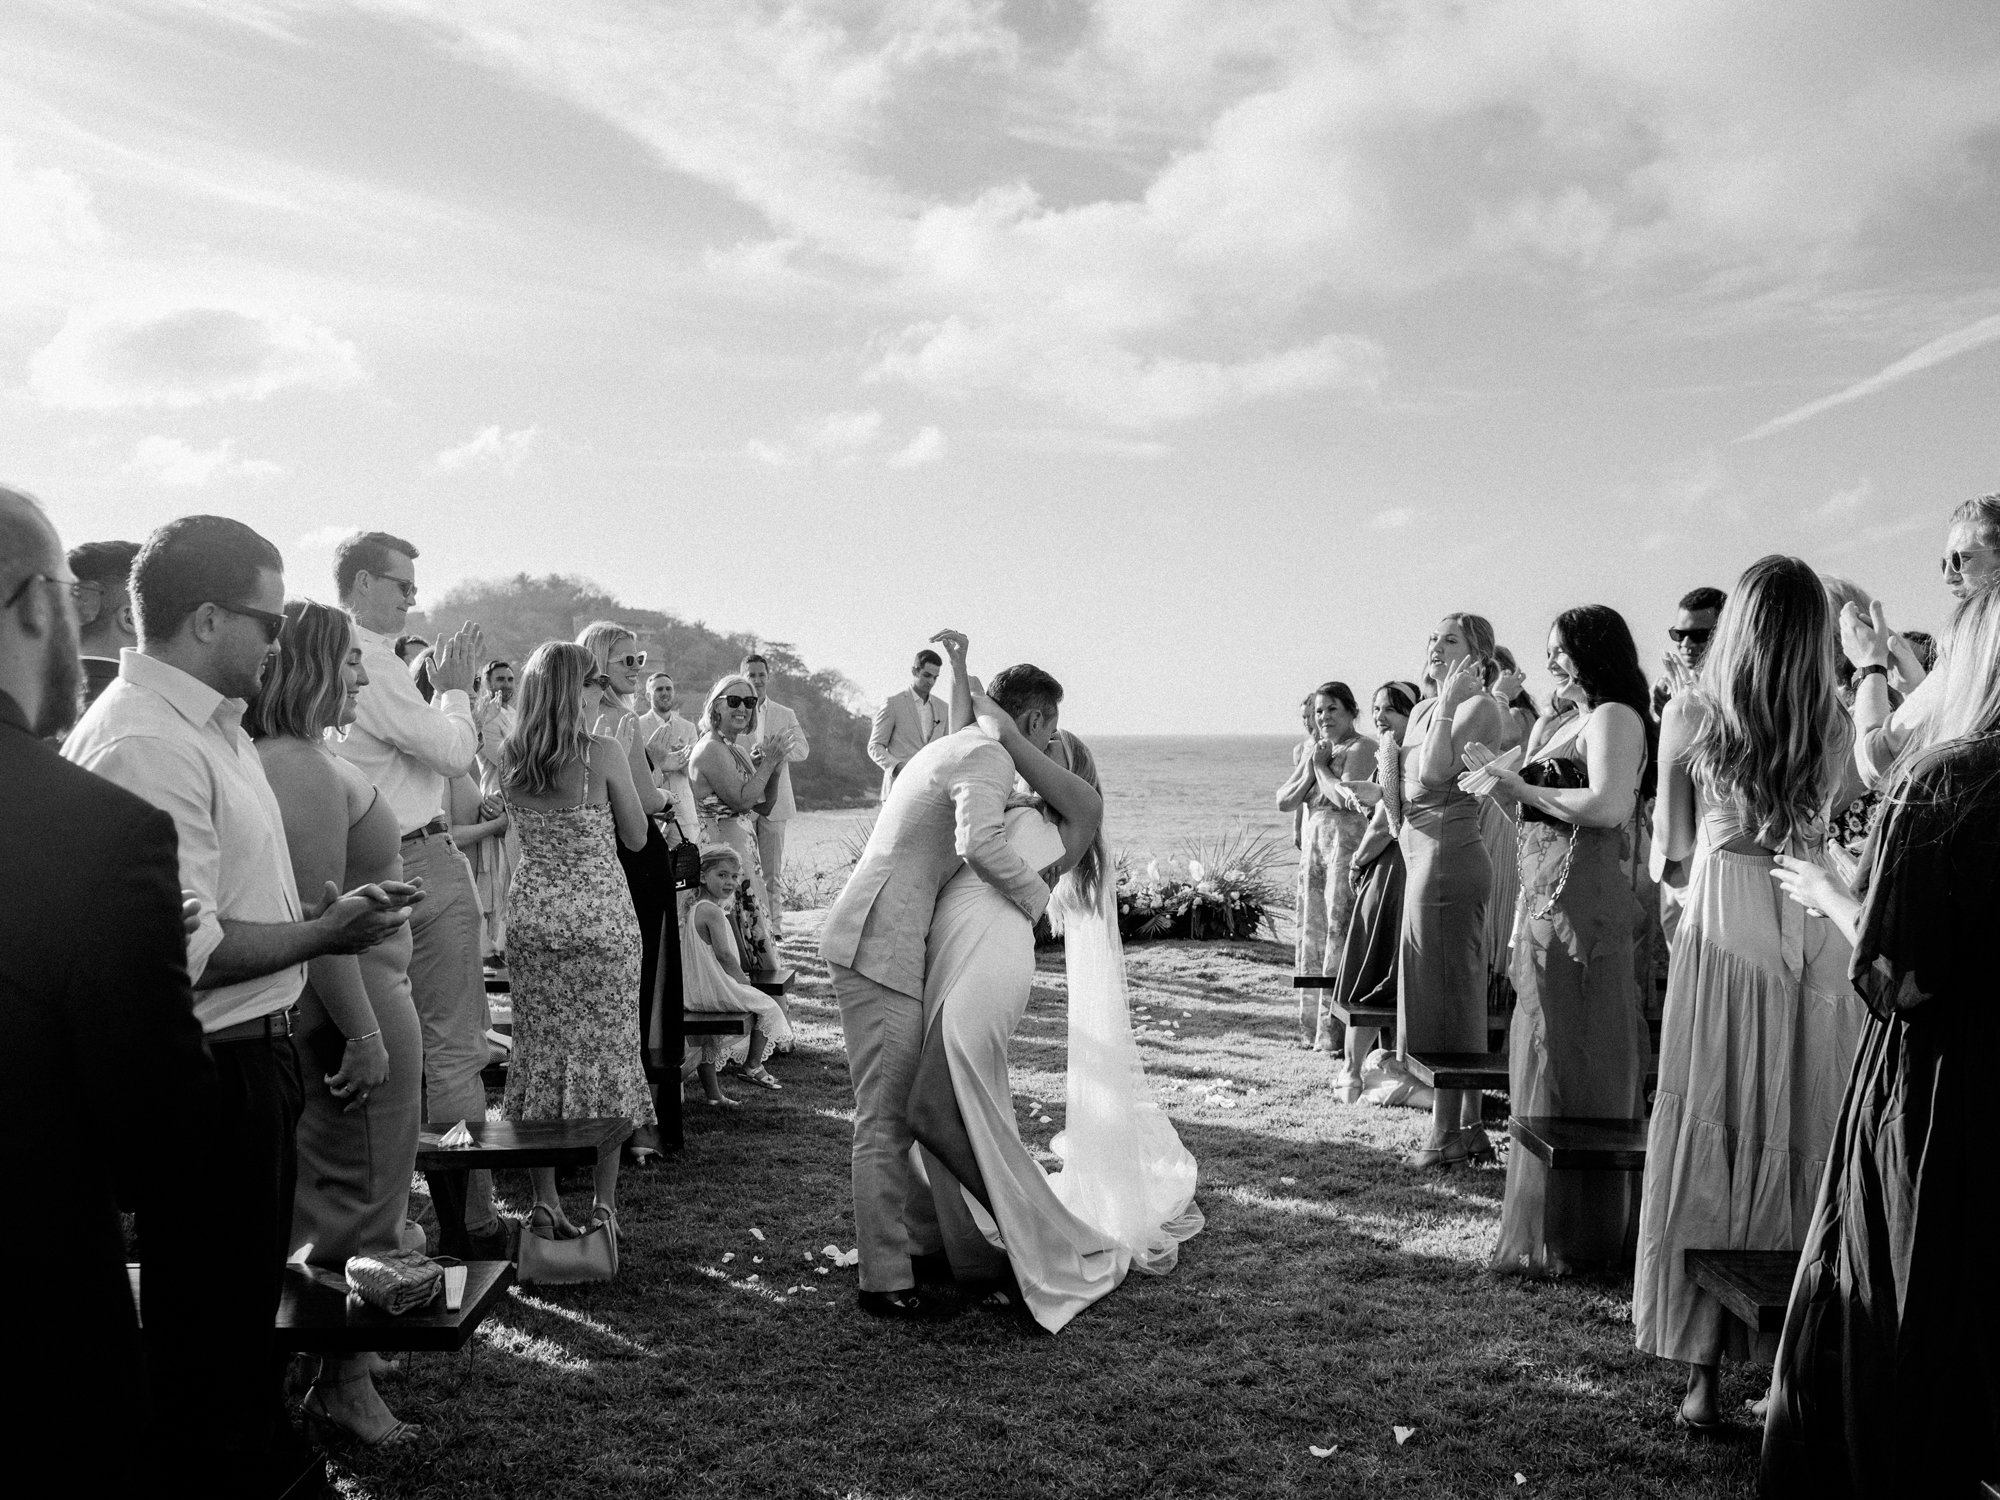 La Palapa Sayulita wedding by christie graham0-1.jpg